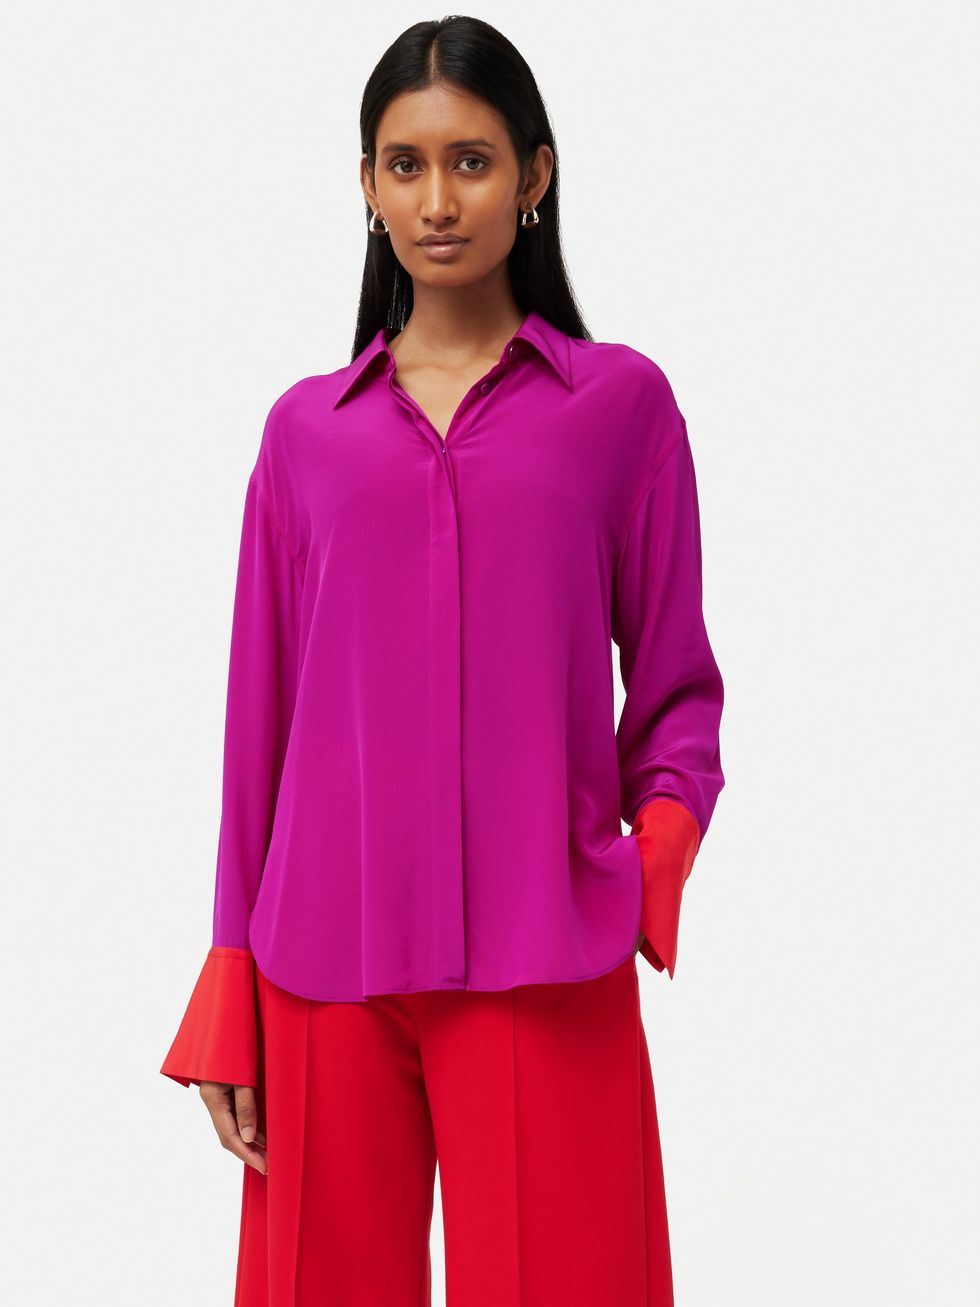 Best silk shirt - Stylish high street silk shirts to buy now